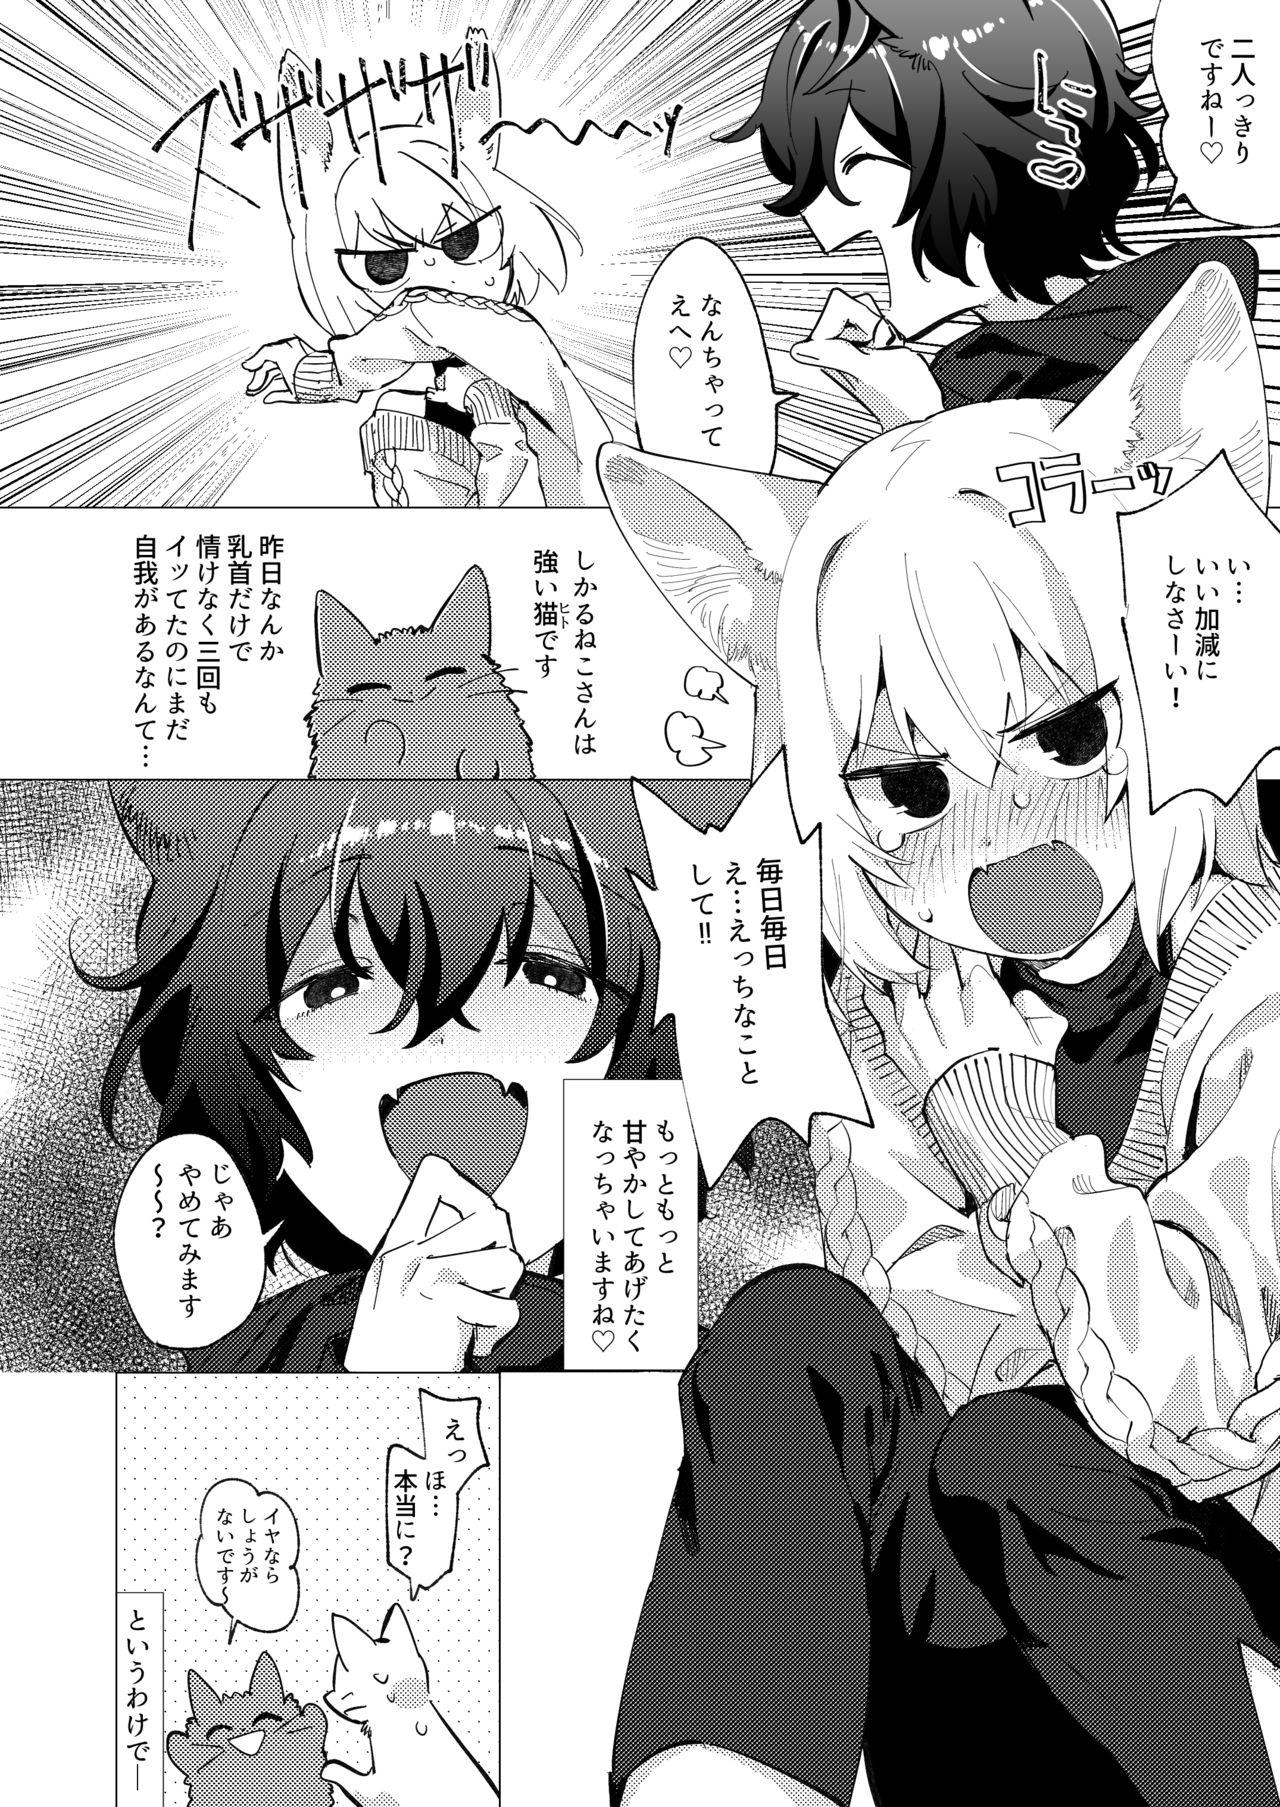 Spooning UR Neko-chans Life Throat - Page 7